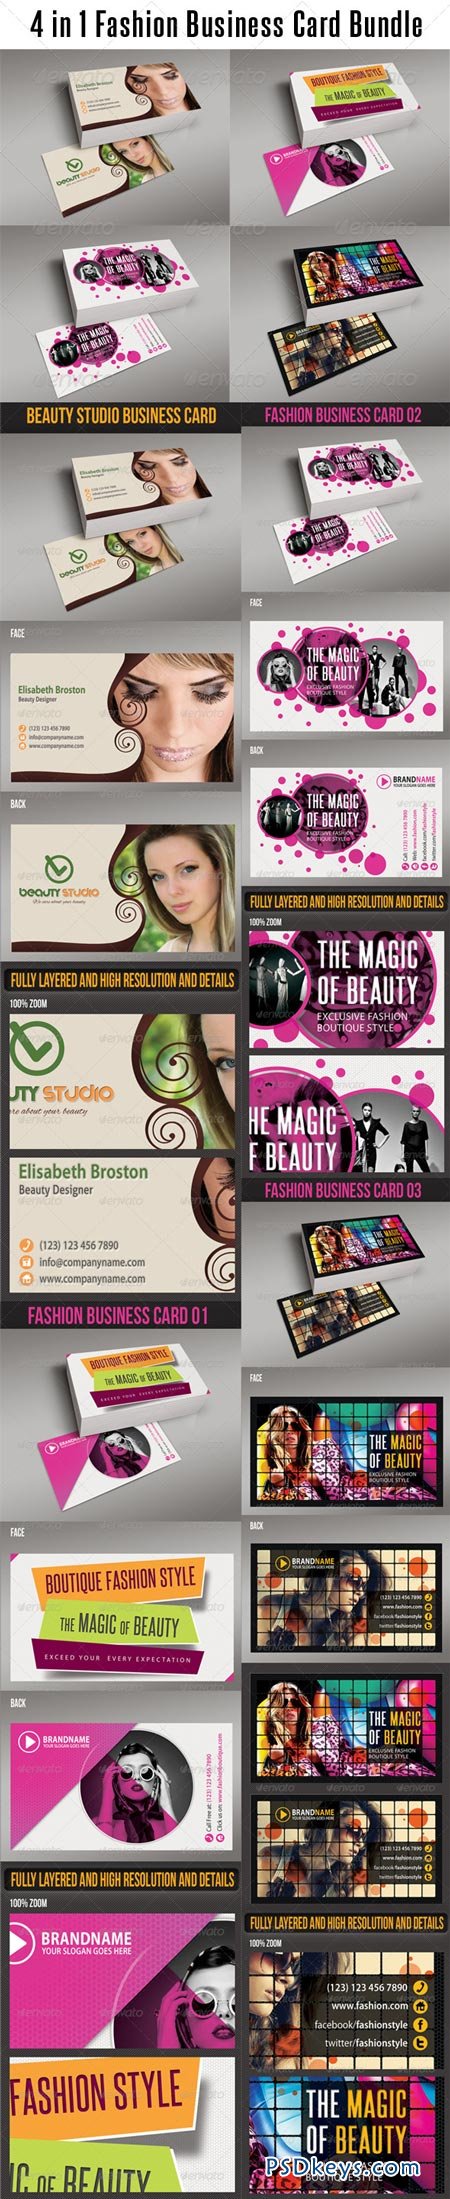 4 in 1 Fashion Business Card Bundle 6257751